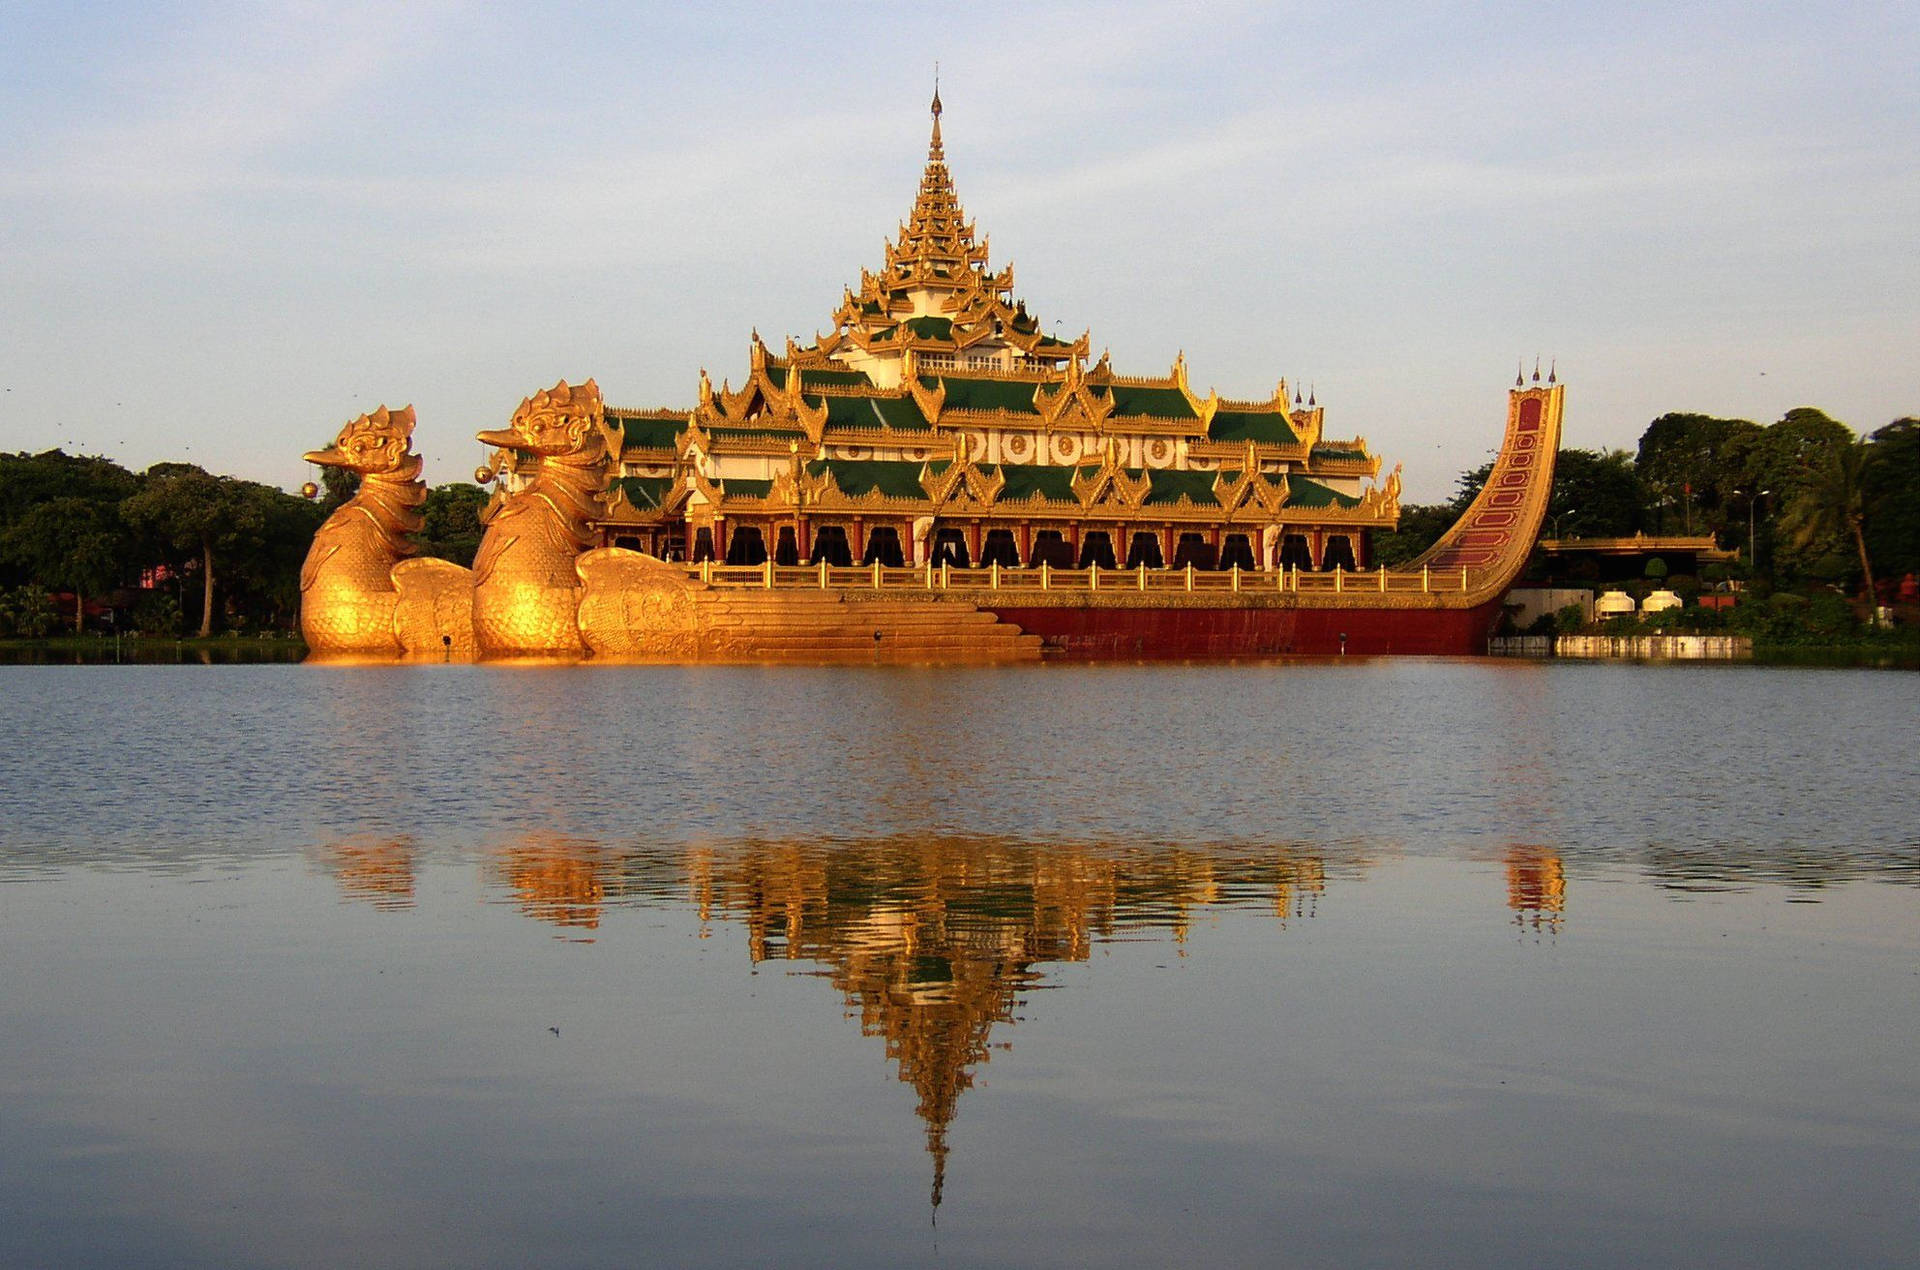 Yangon Karaweik Palace Reflection